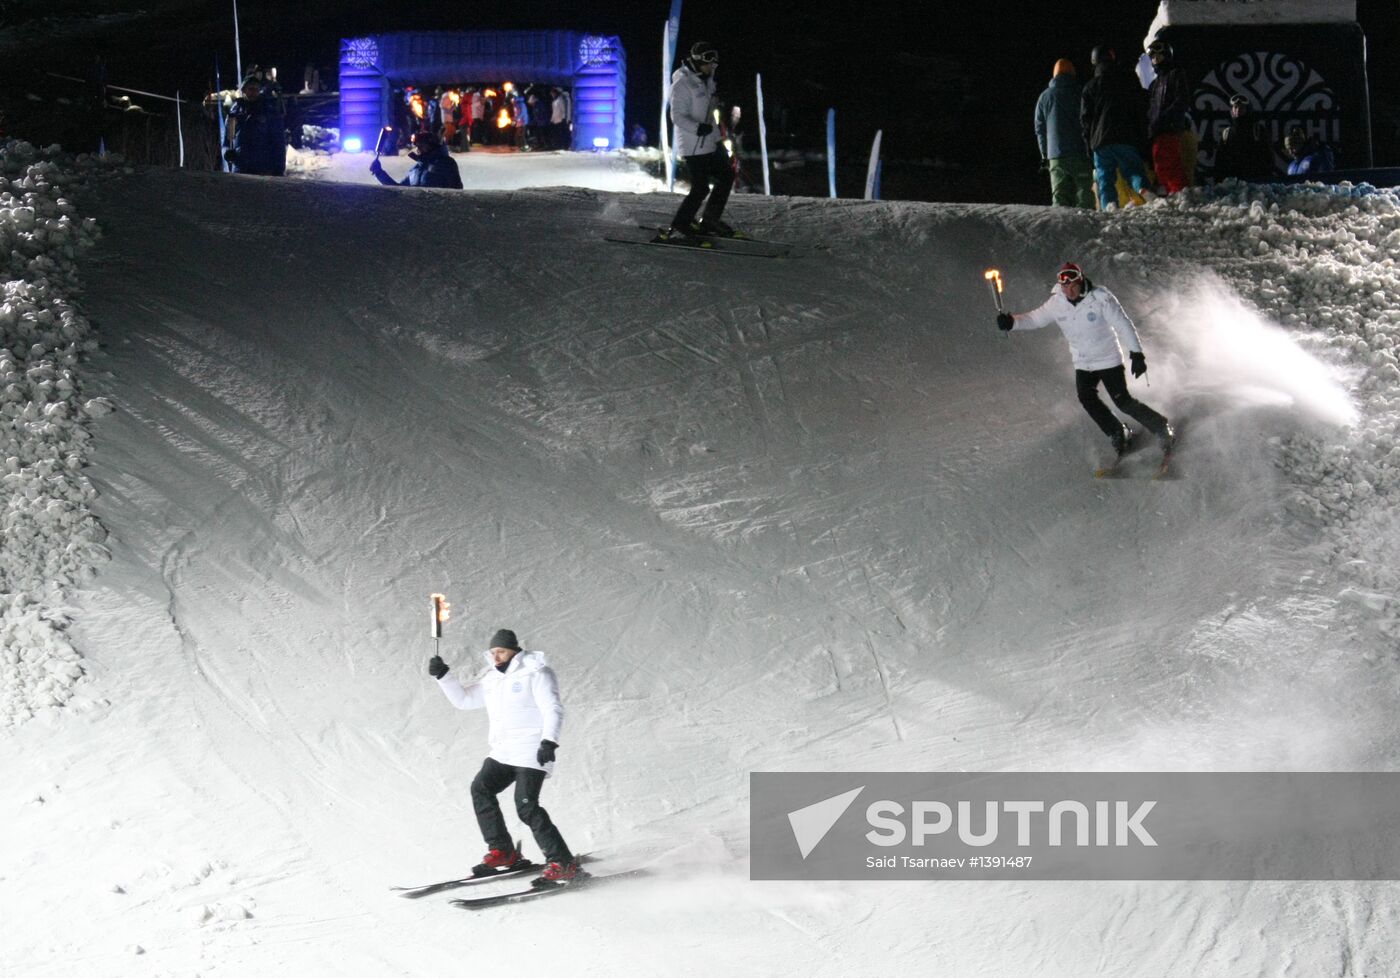 Veduchi alpine skiing resort presented in Chechen Republic